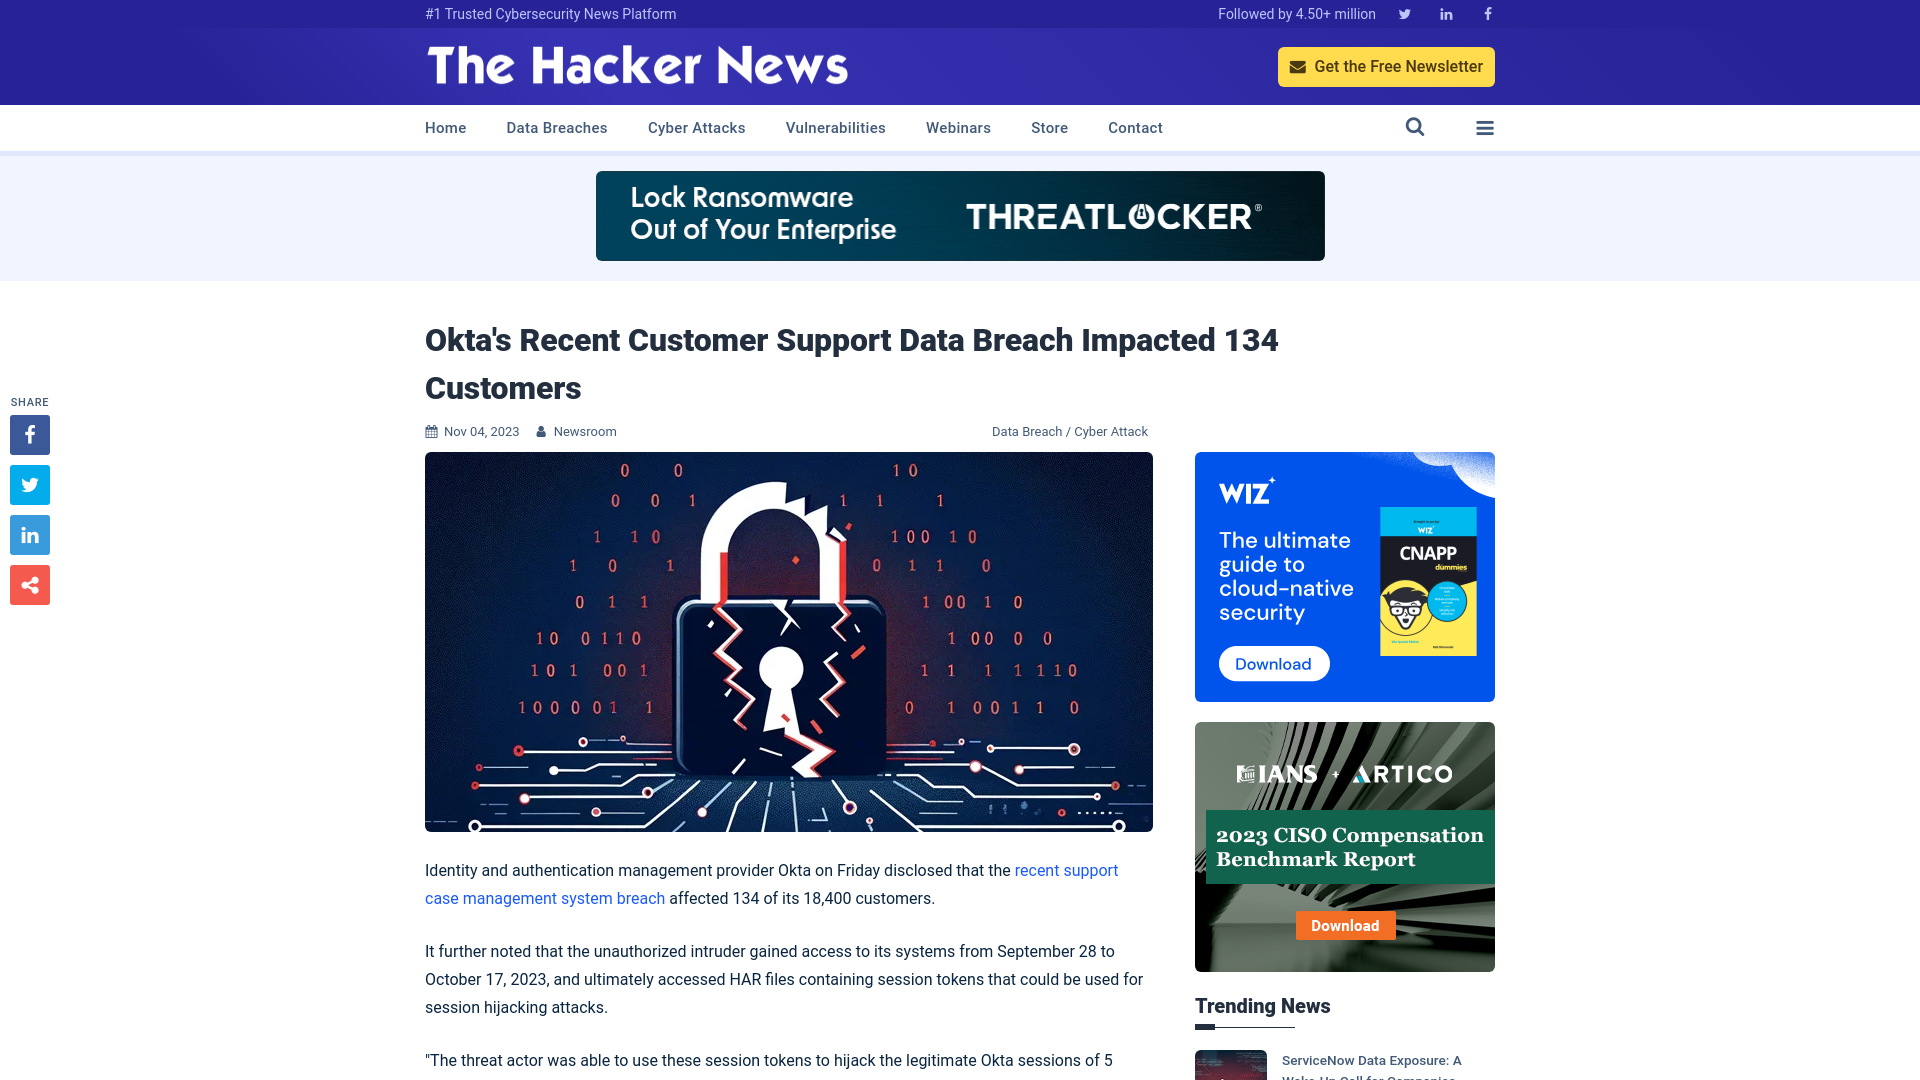 Okta's Recent Customer Support Data Breach Impacted 134 Customers